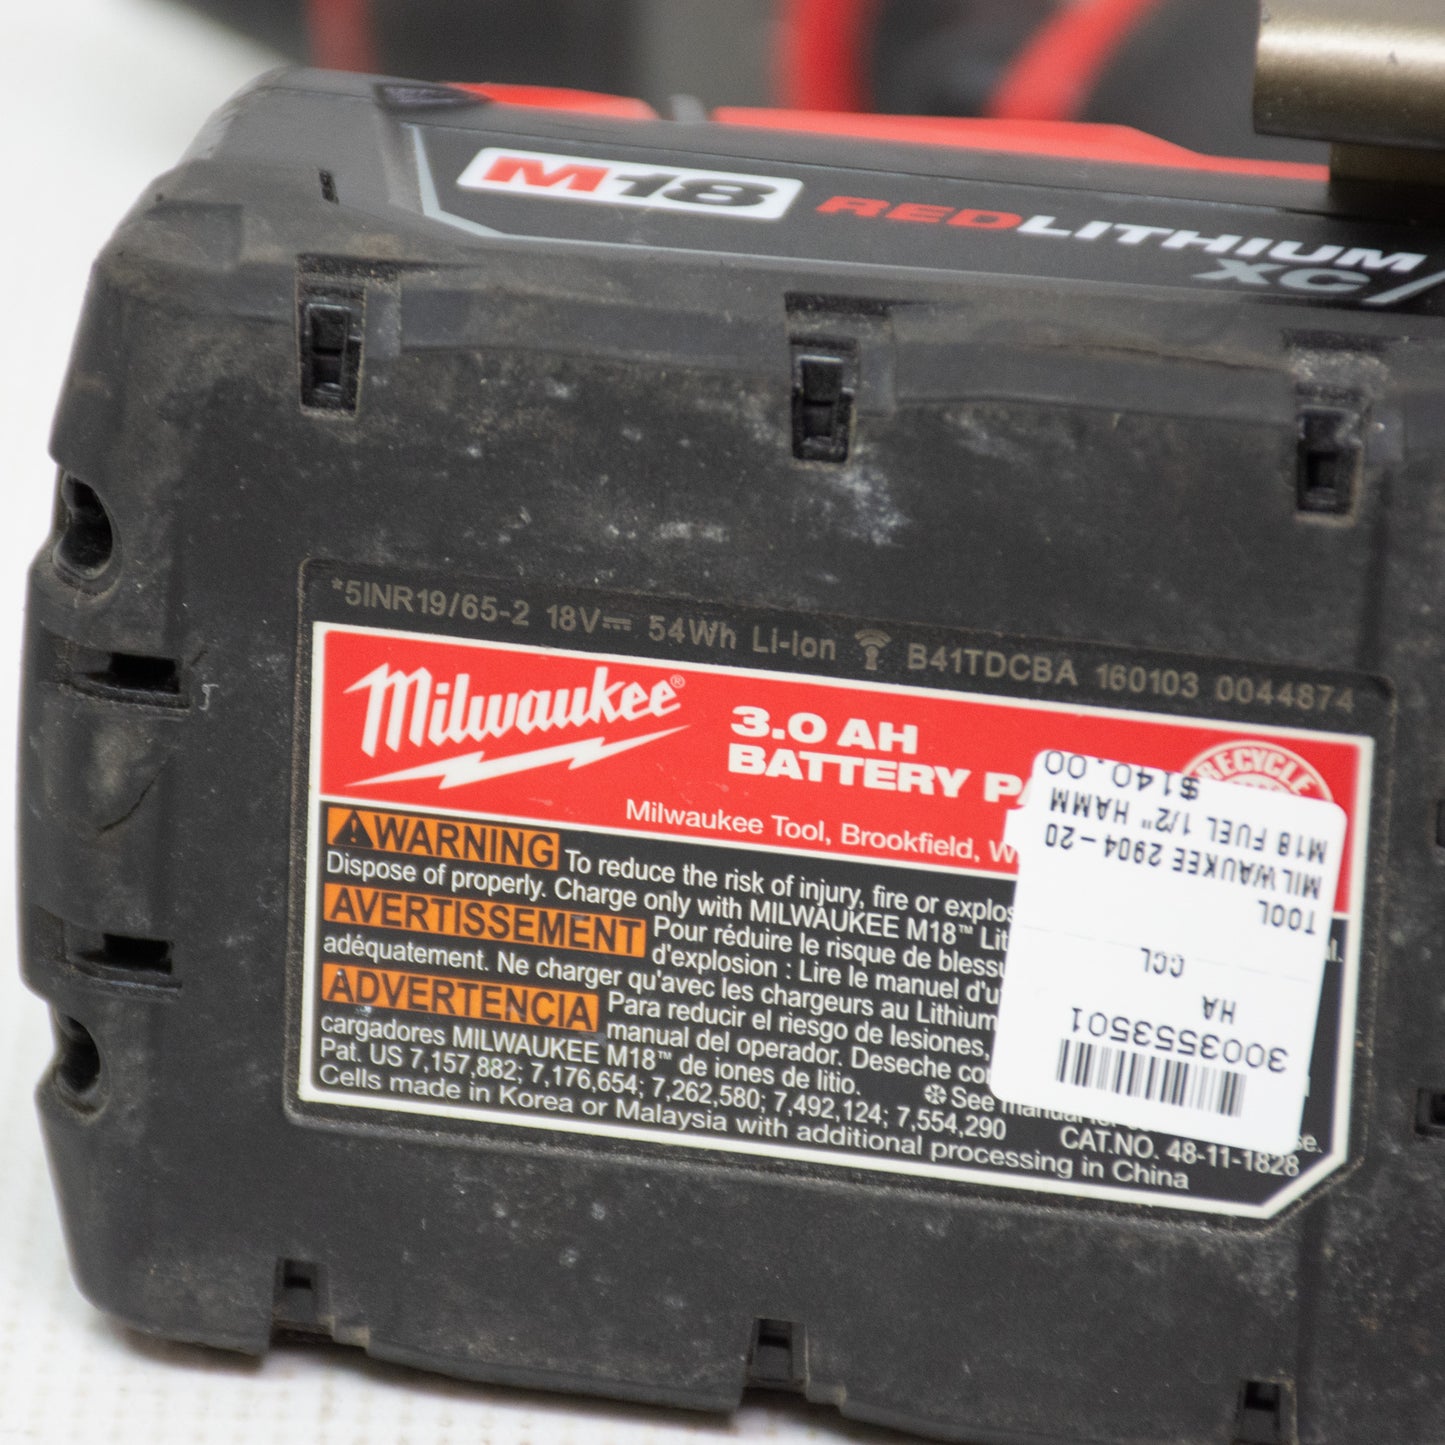 Milwaukee 2904-20 M18 Fuel 1/2" Hammer Drill/Driver